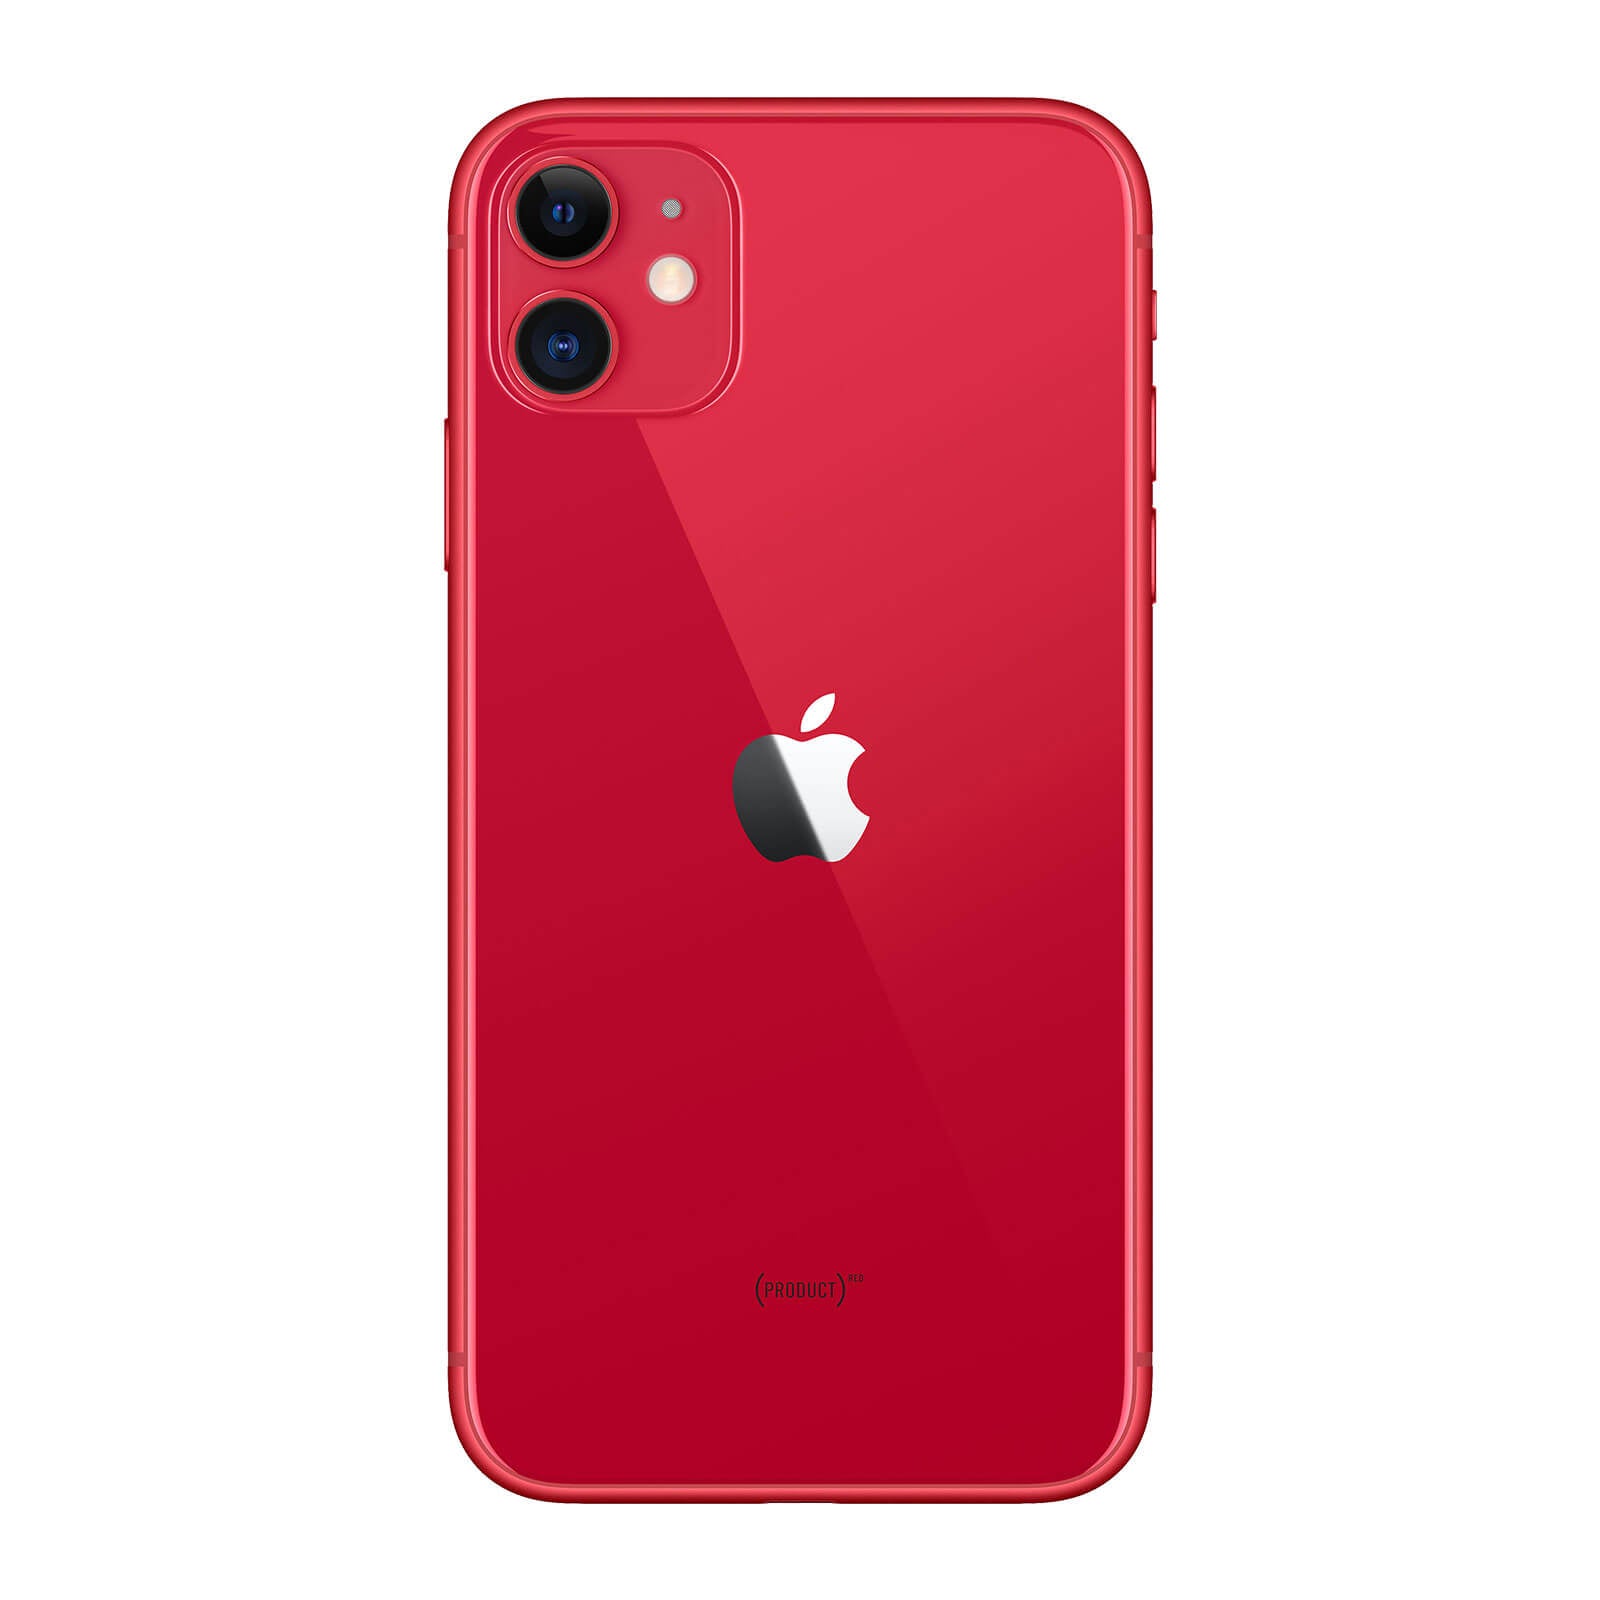 Apple iPhone 11 128GB Product Red Fair - Verizon